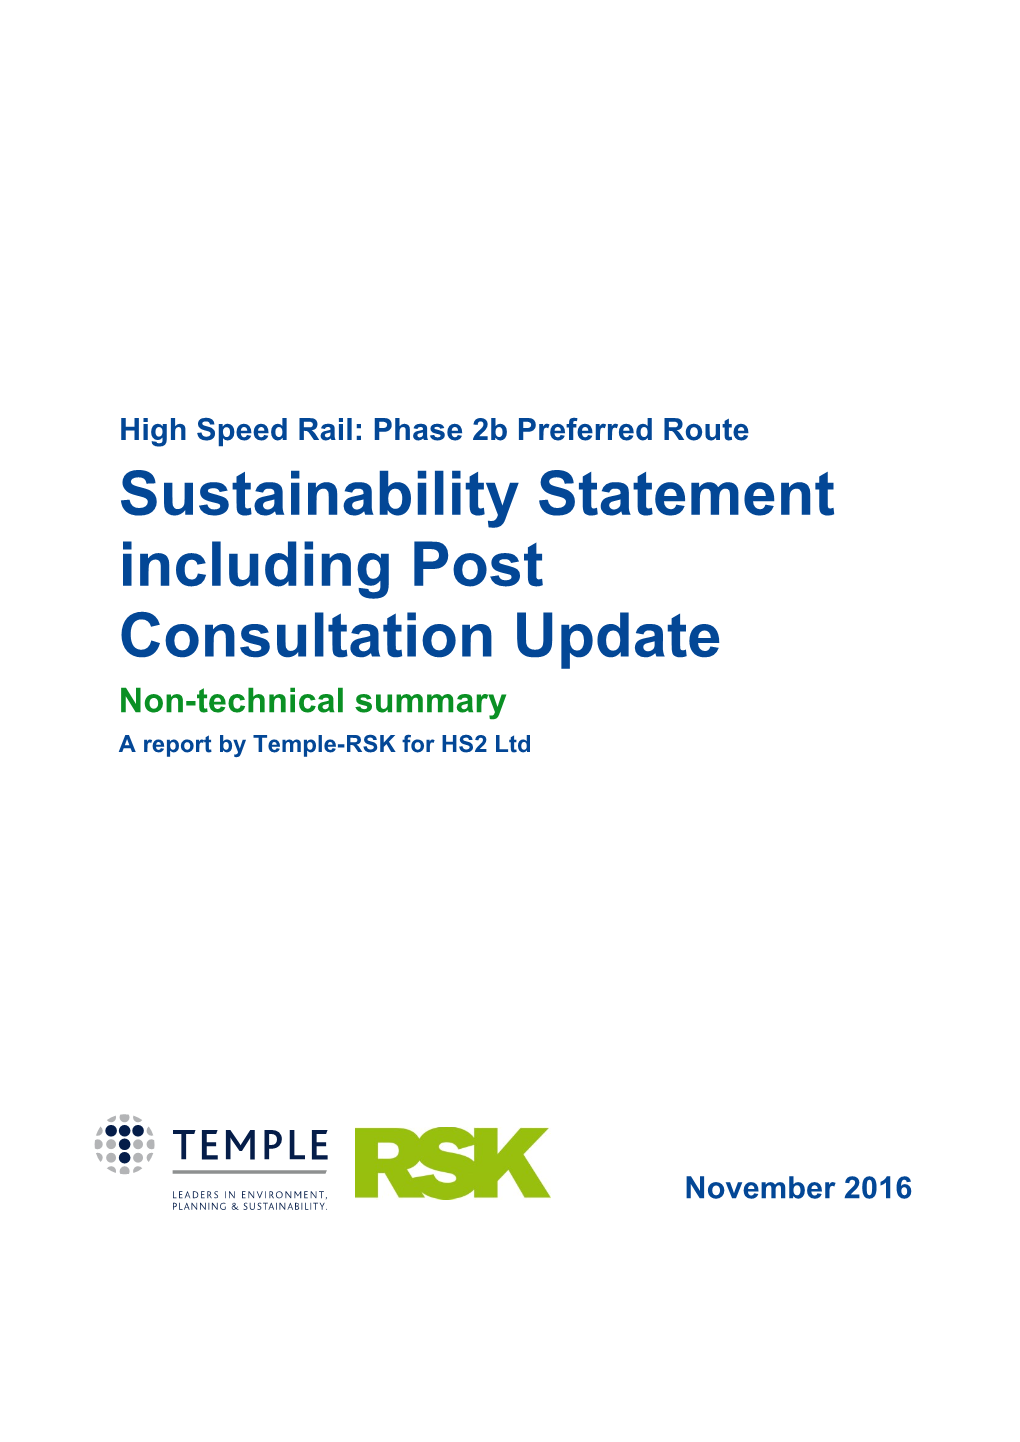 C331 Sustainability Statement Update Post Consultation Non-Technical